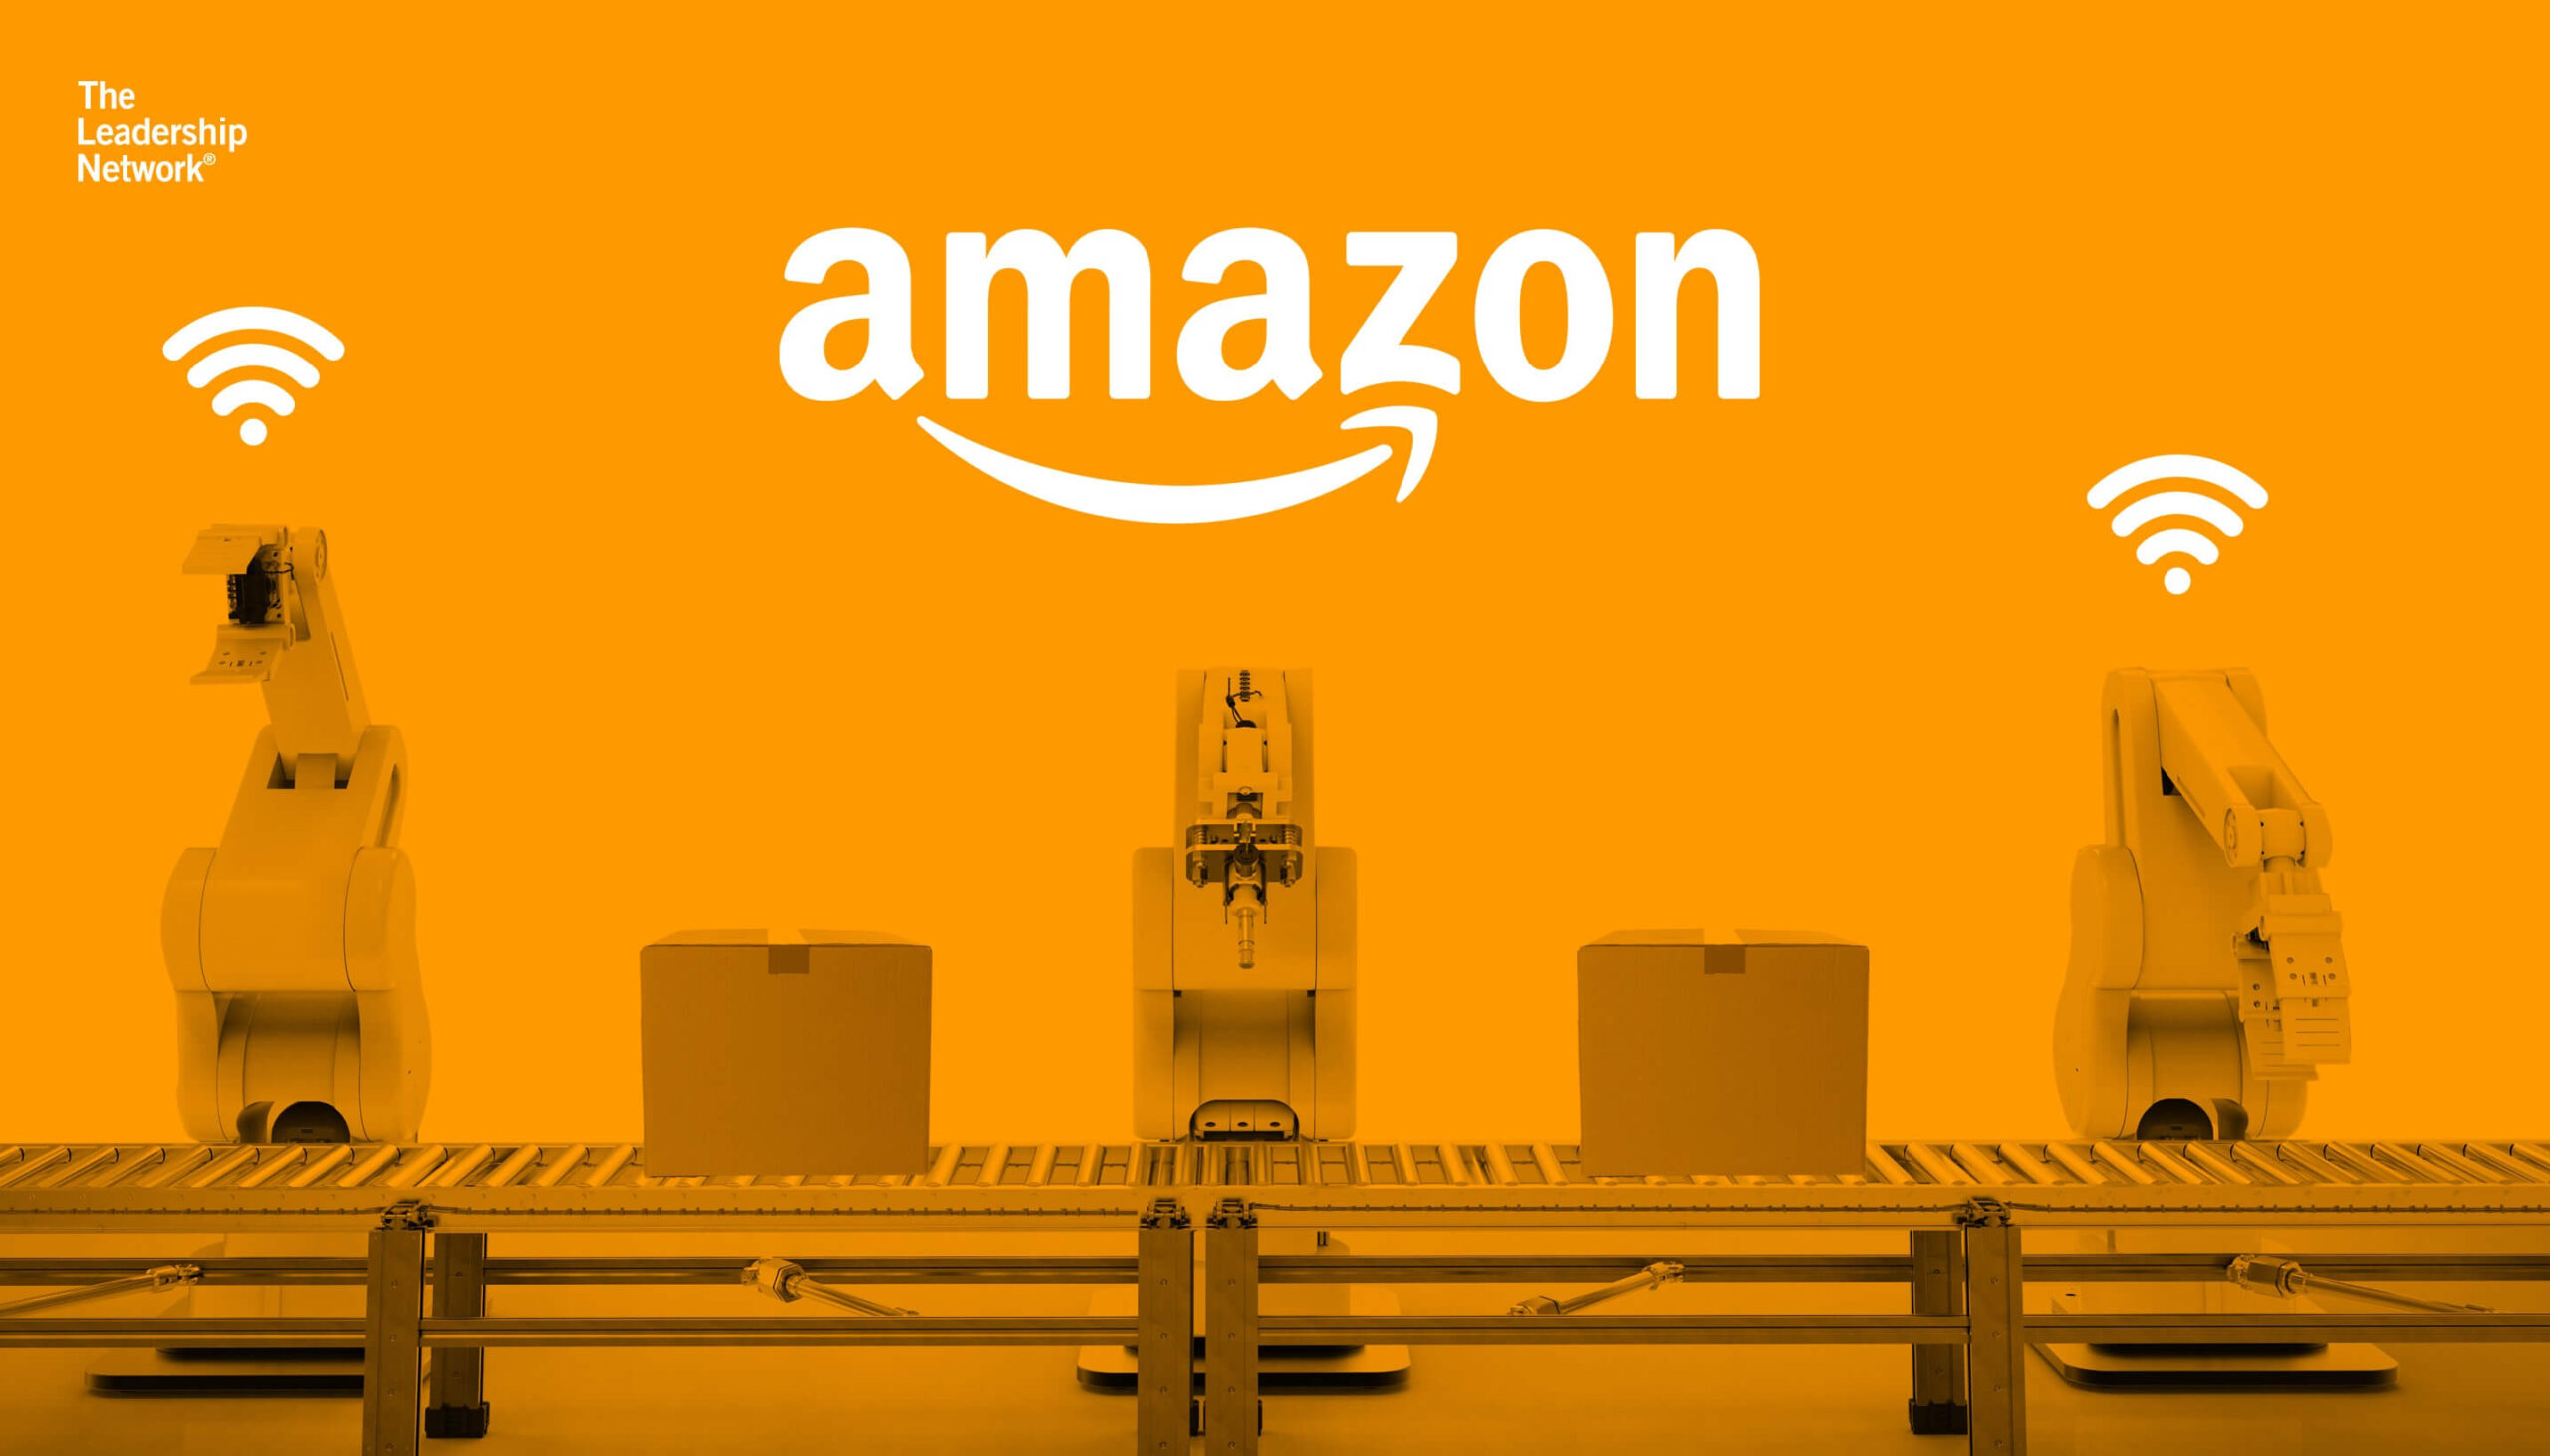 Amazon 14 leadership principles